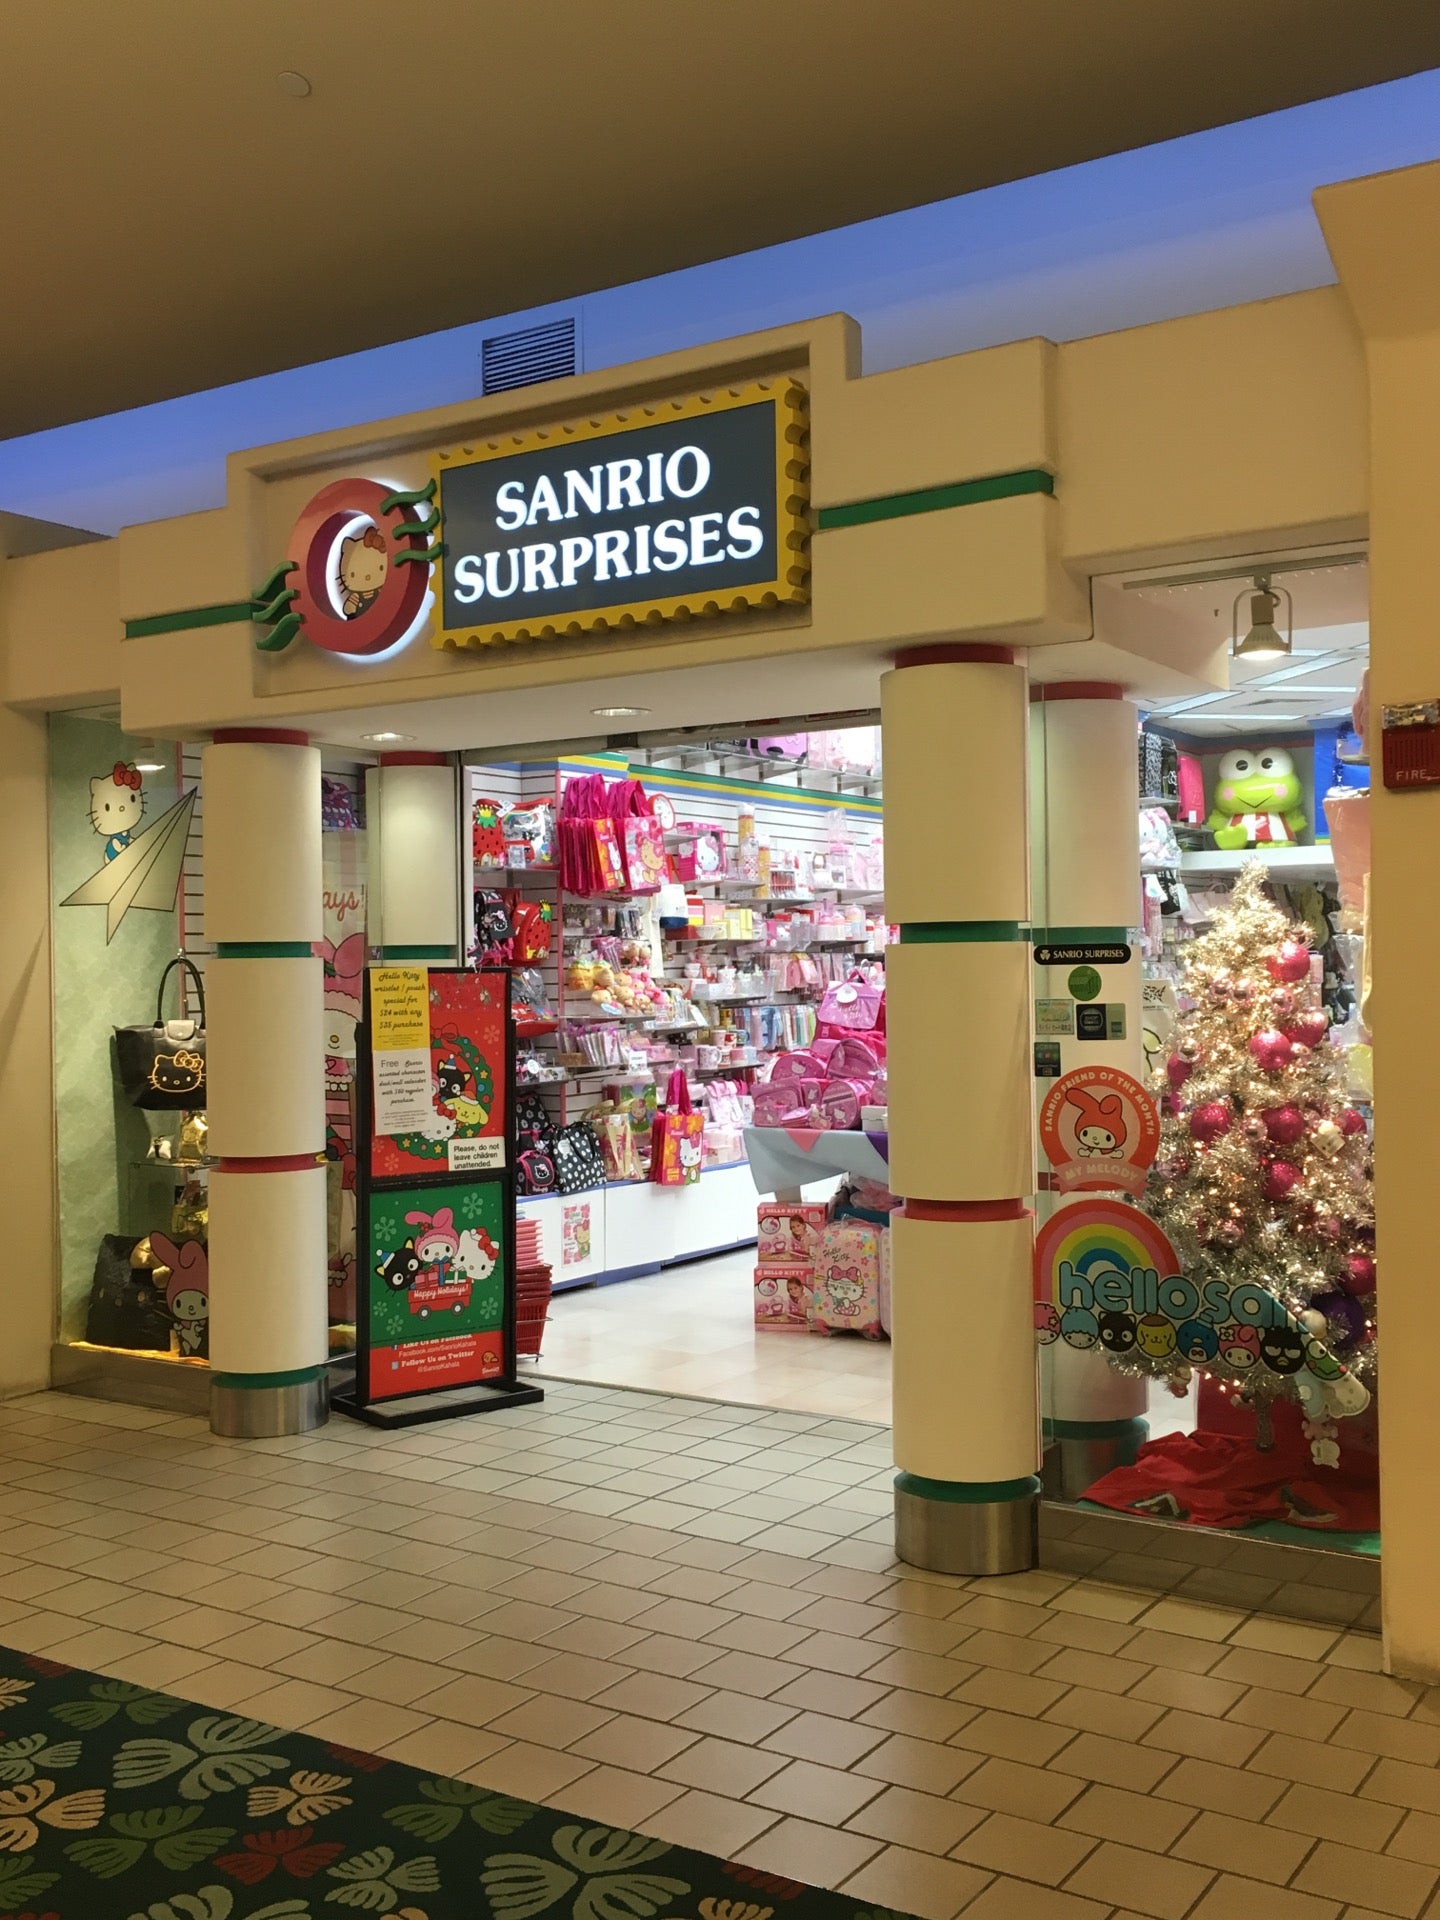 SANRIO SURPRISES - 231 Photos & 75 Reviews - 4211 Waialae Ave, Honolulu,  Hawaii - Toy Stores - Phone Number - Yelp